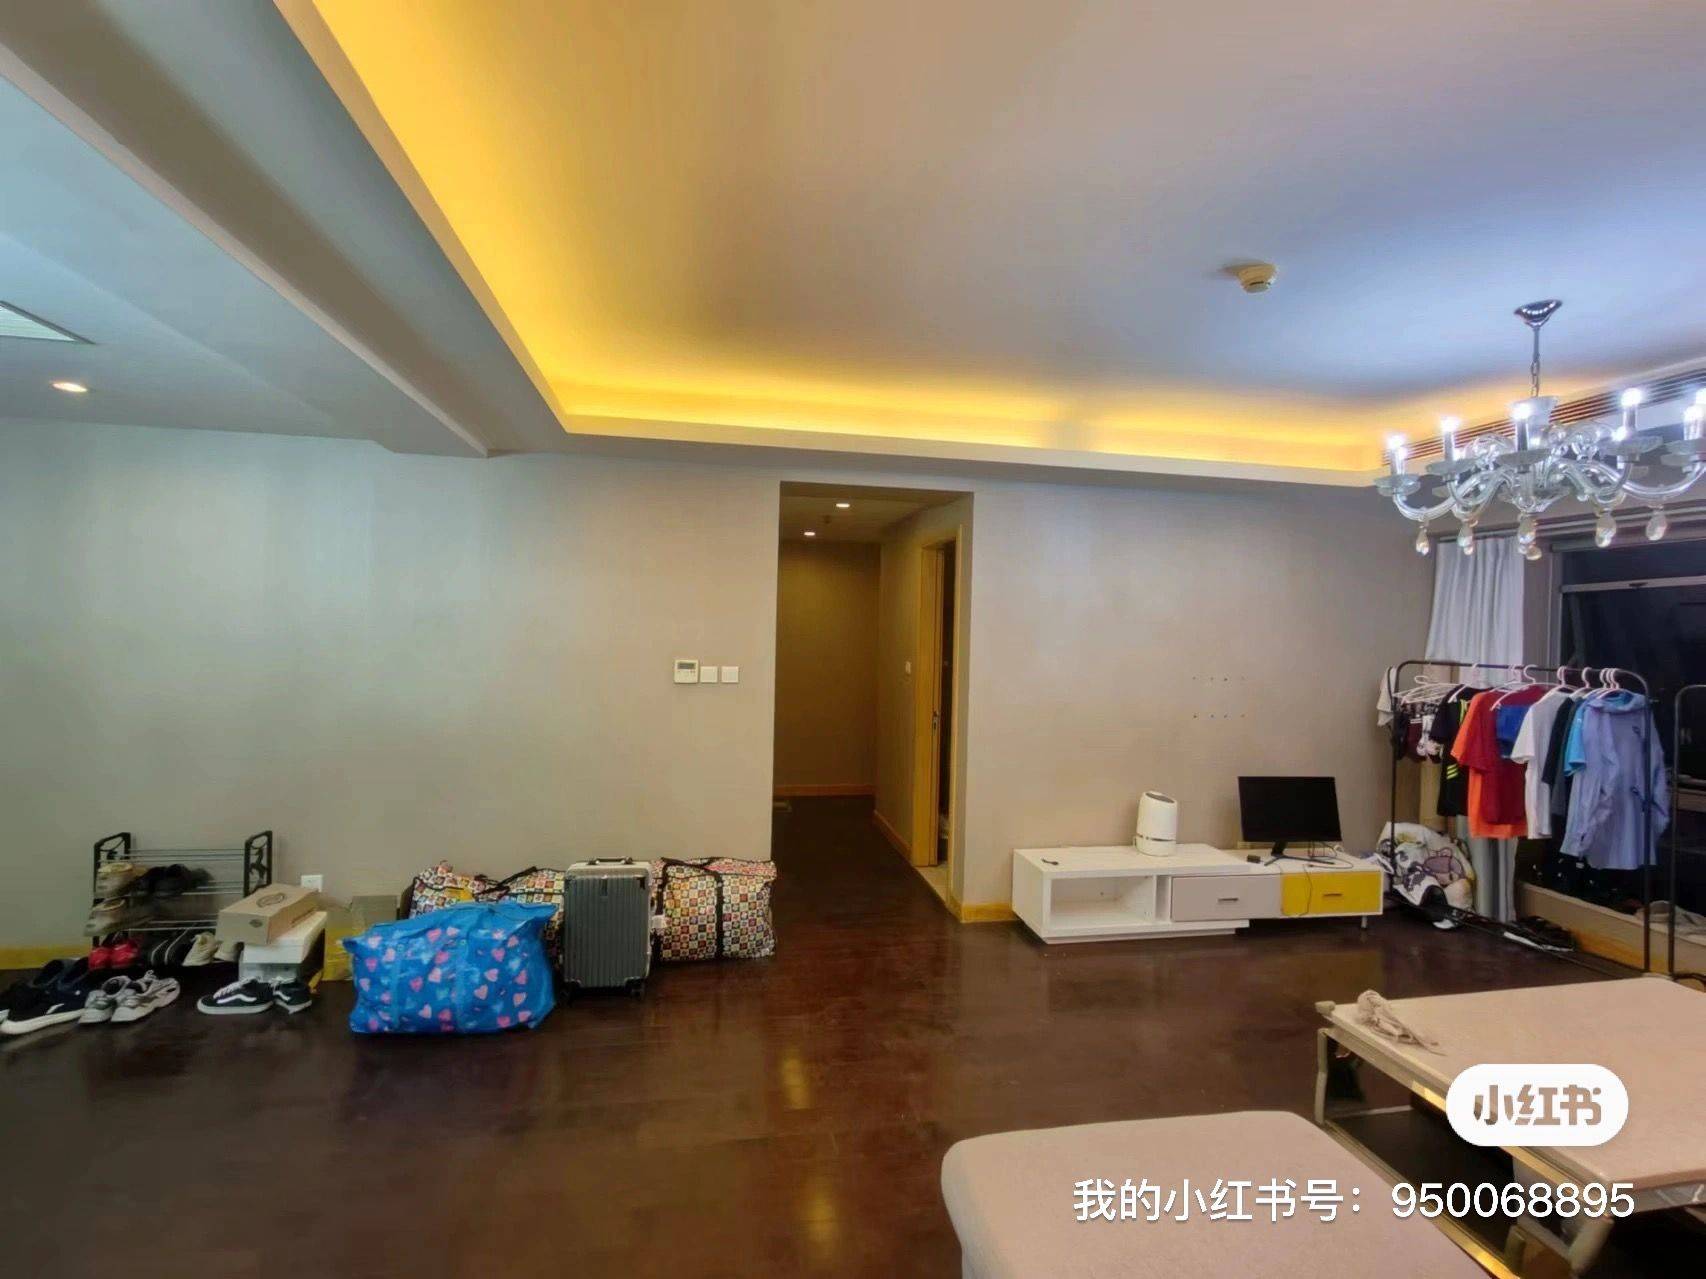 Beijing-Tongzhou-Cozy Home,Clean&Comfy,No Gender Limit,Hustle & Bustle,“Friends”,Chilled,LGBTQ Friendly,Pet Friendly